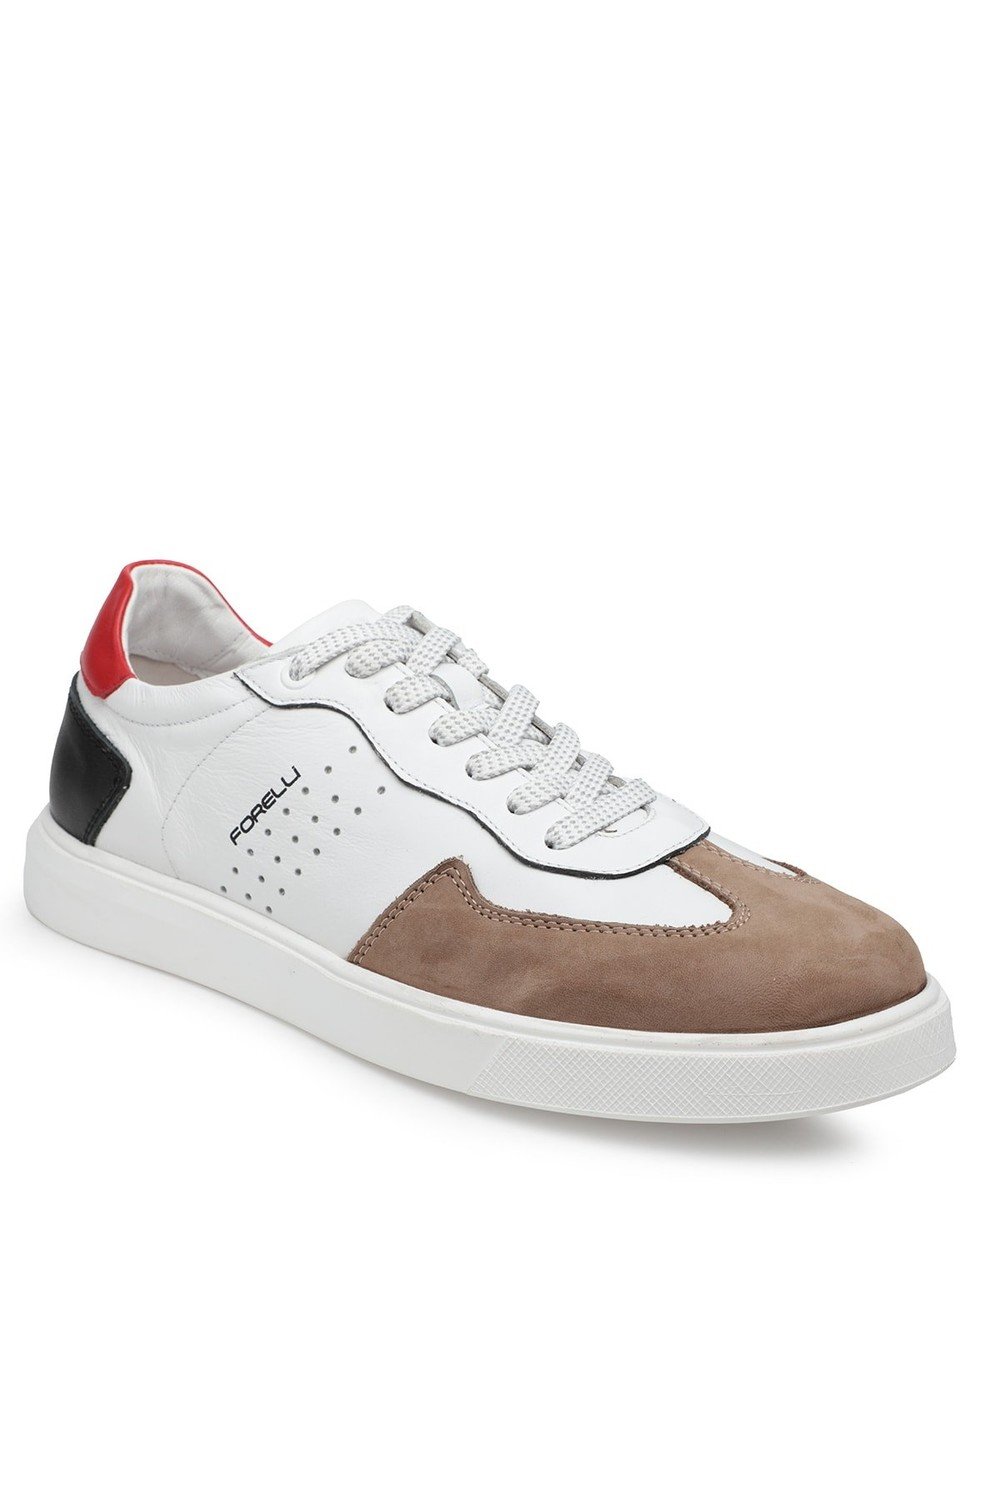 Forelli Sneakers - Brown - Flat